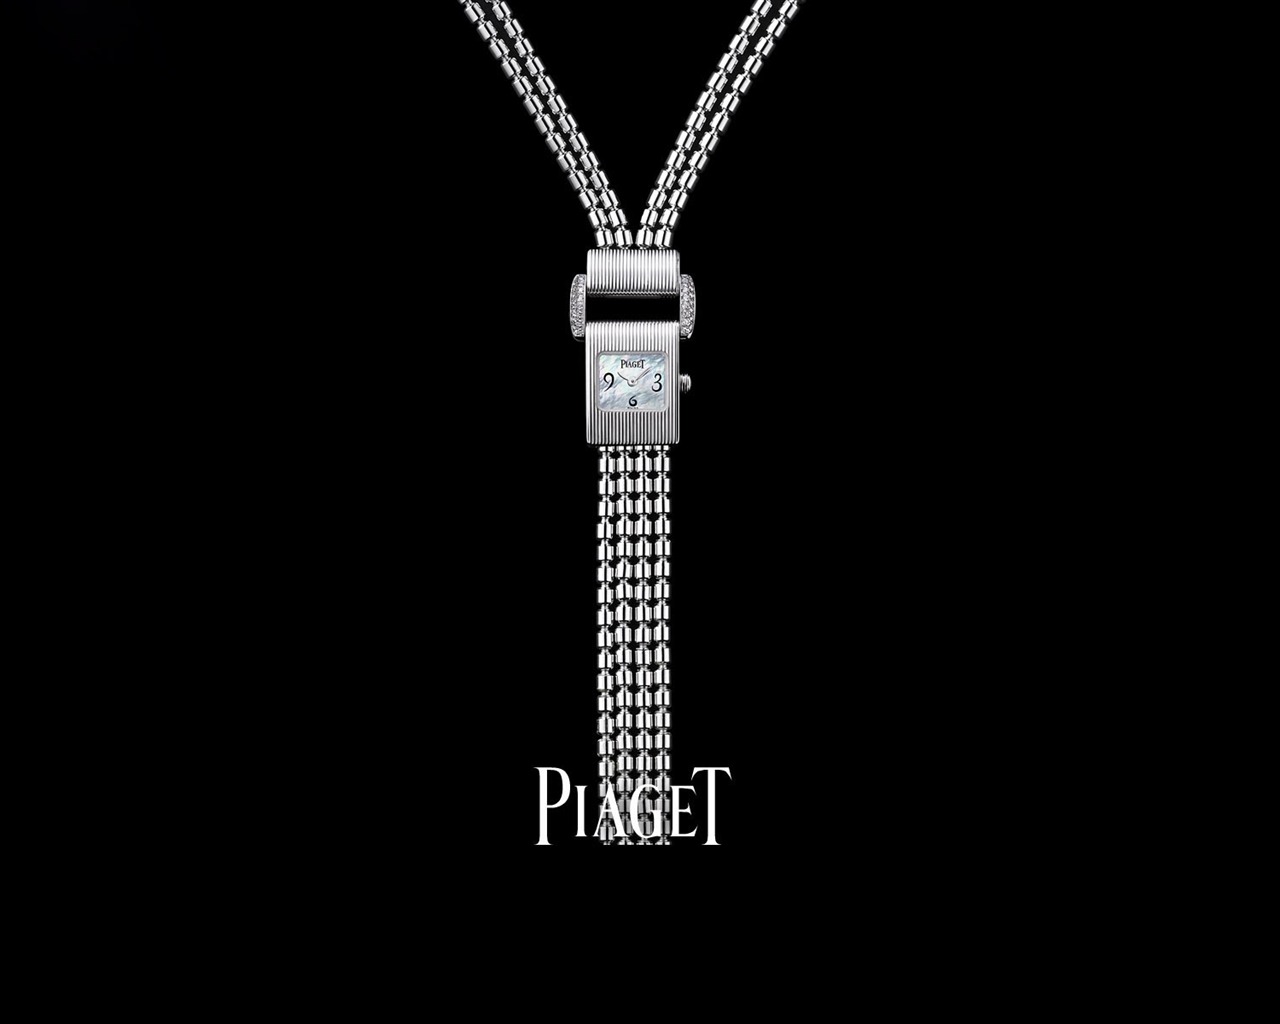 Piaget Diamond watch wallpaper (1) #3 - 1280x1024